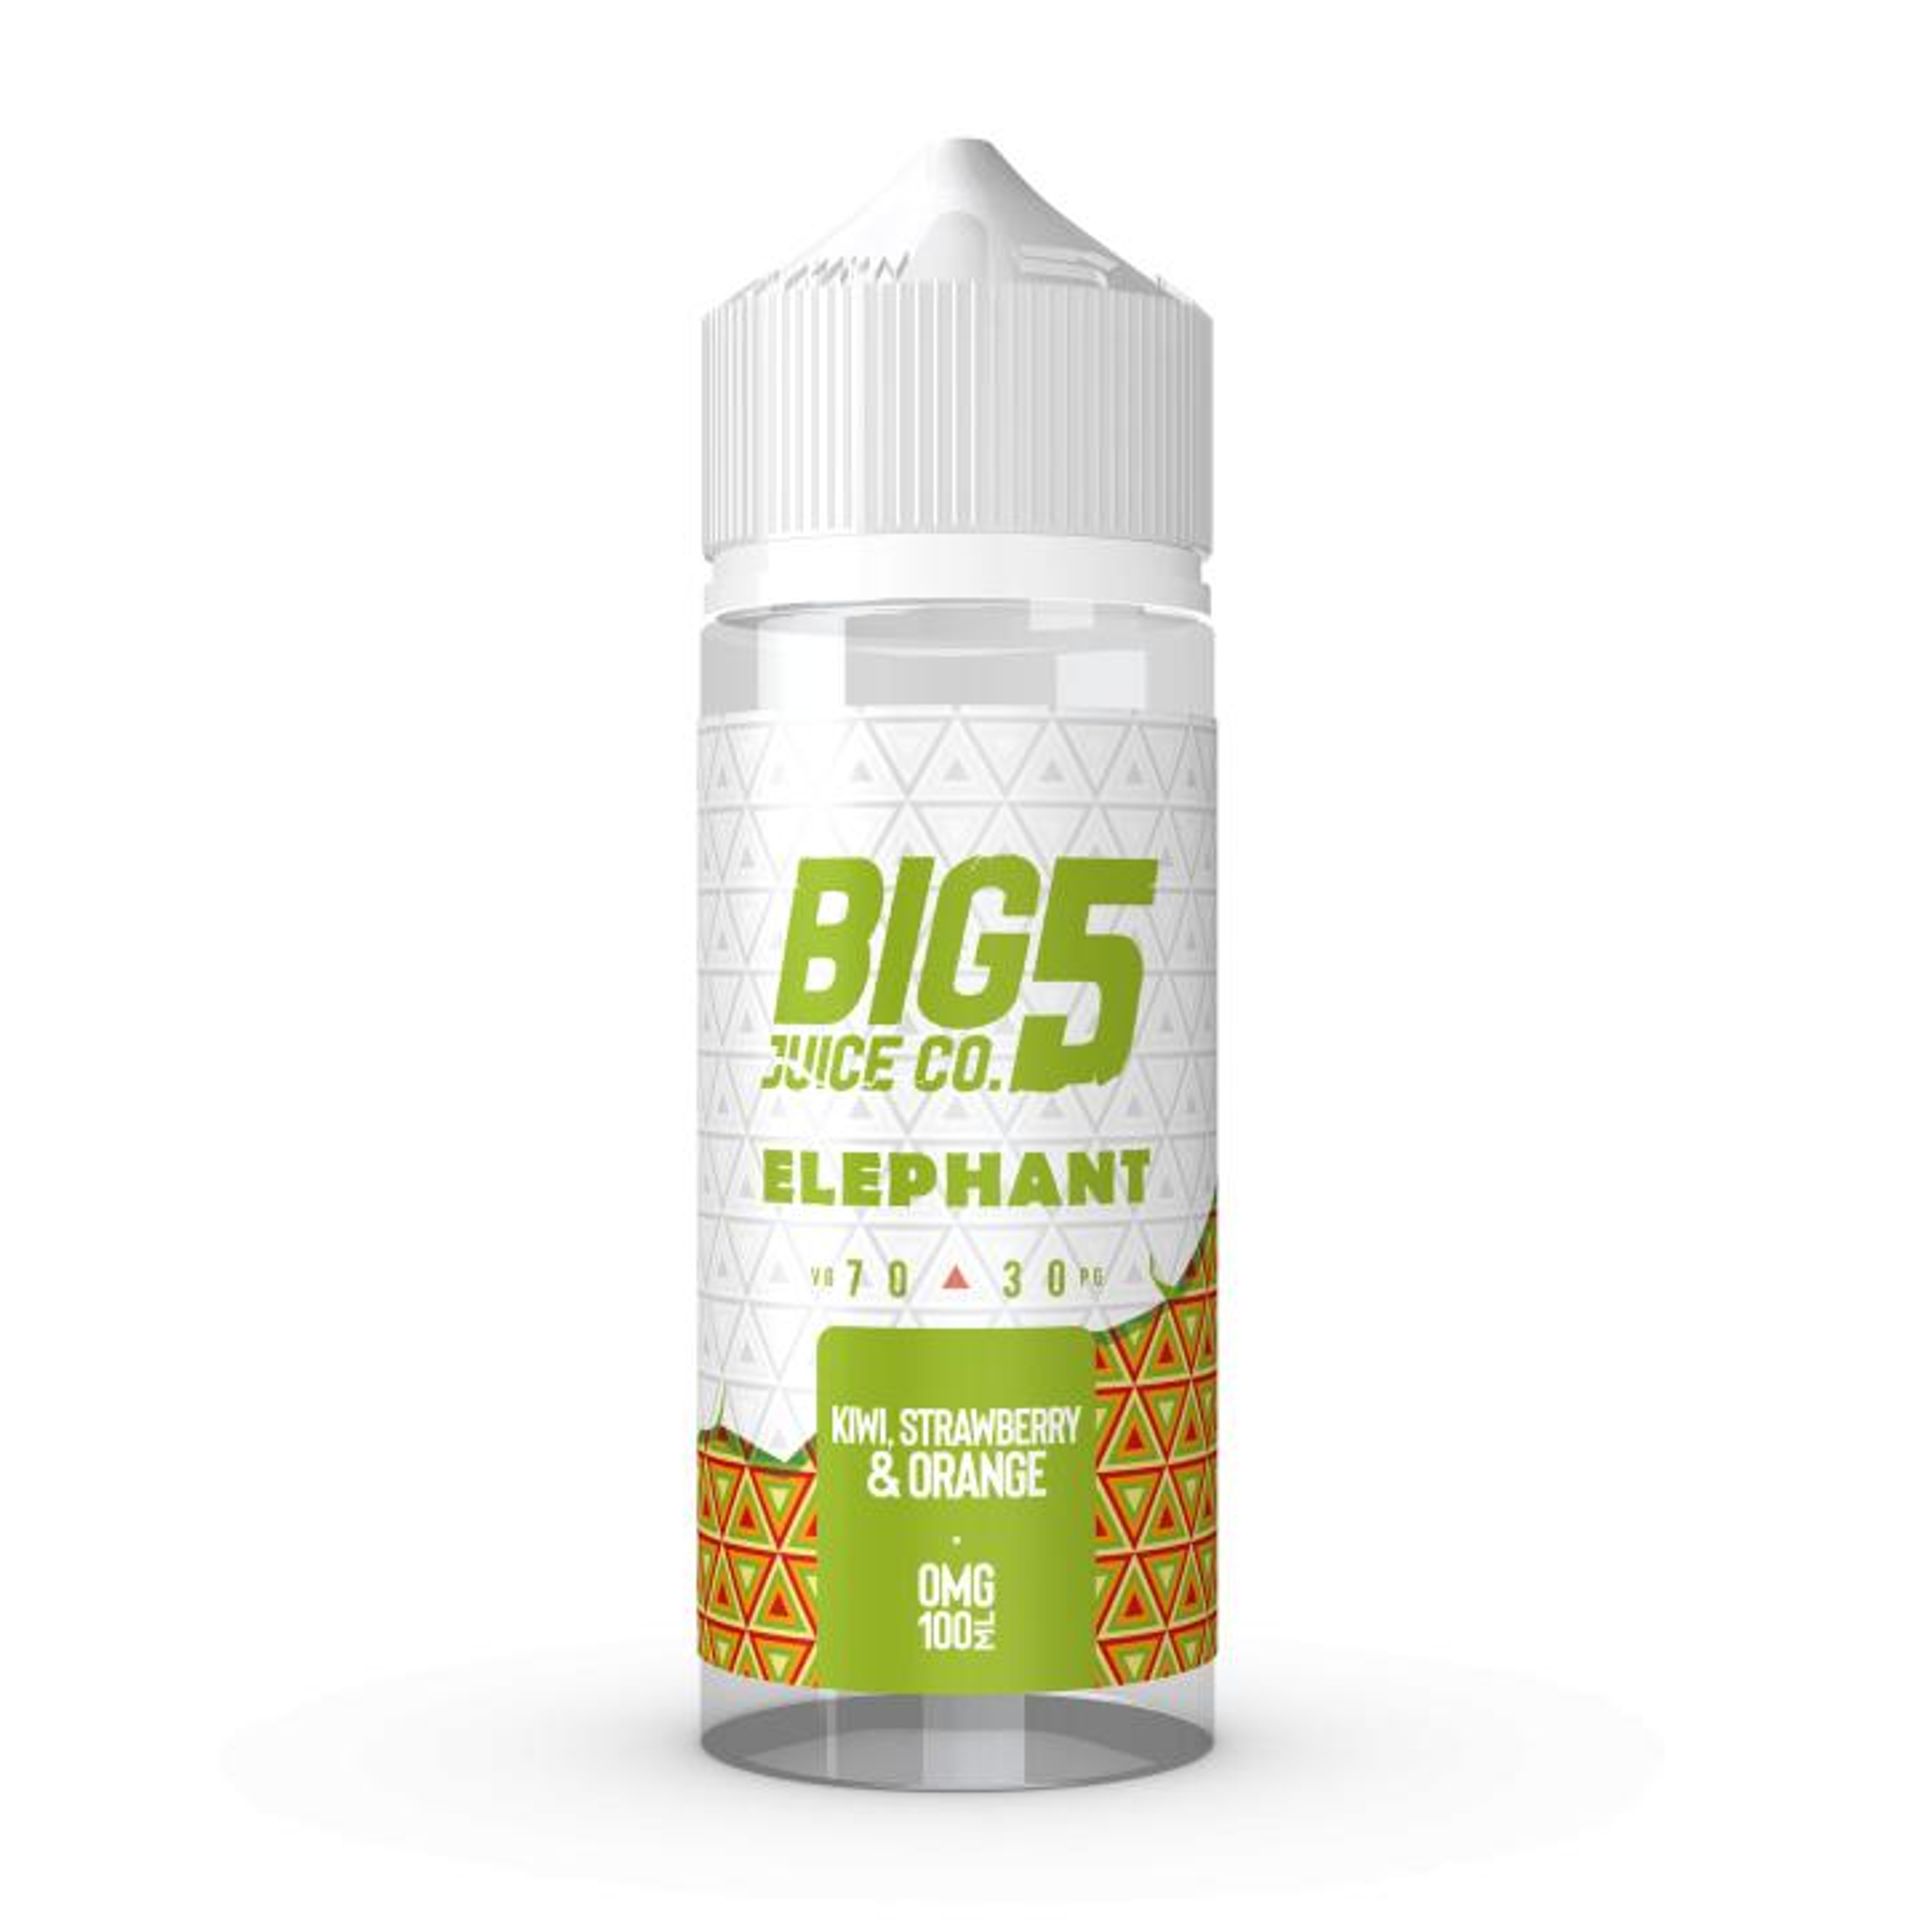 Image of Elephant by Big 5